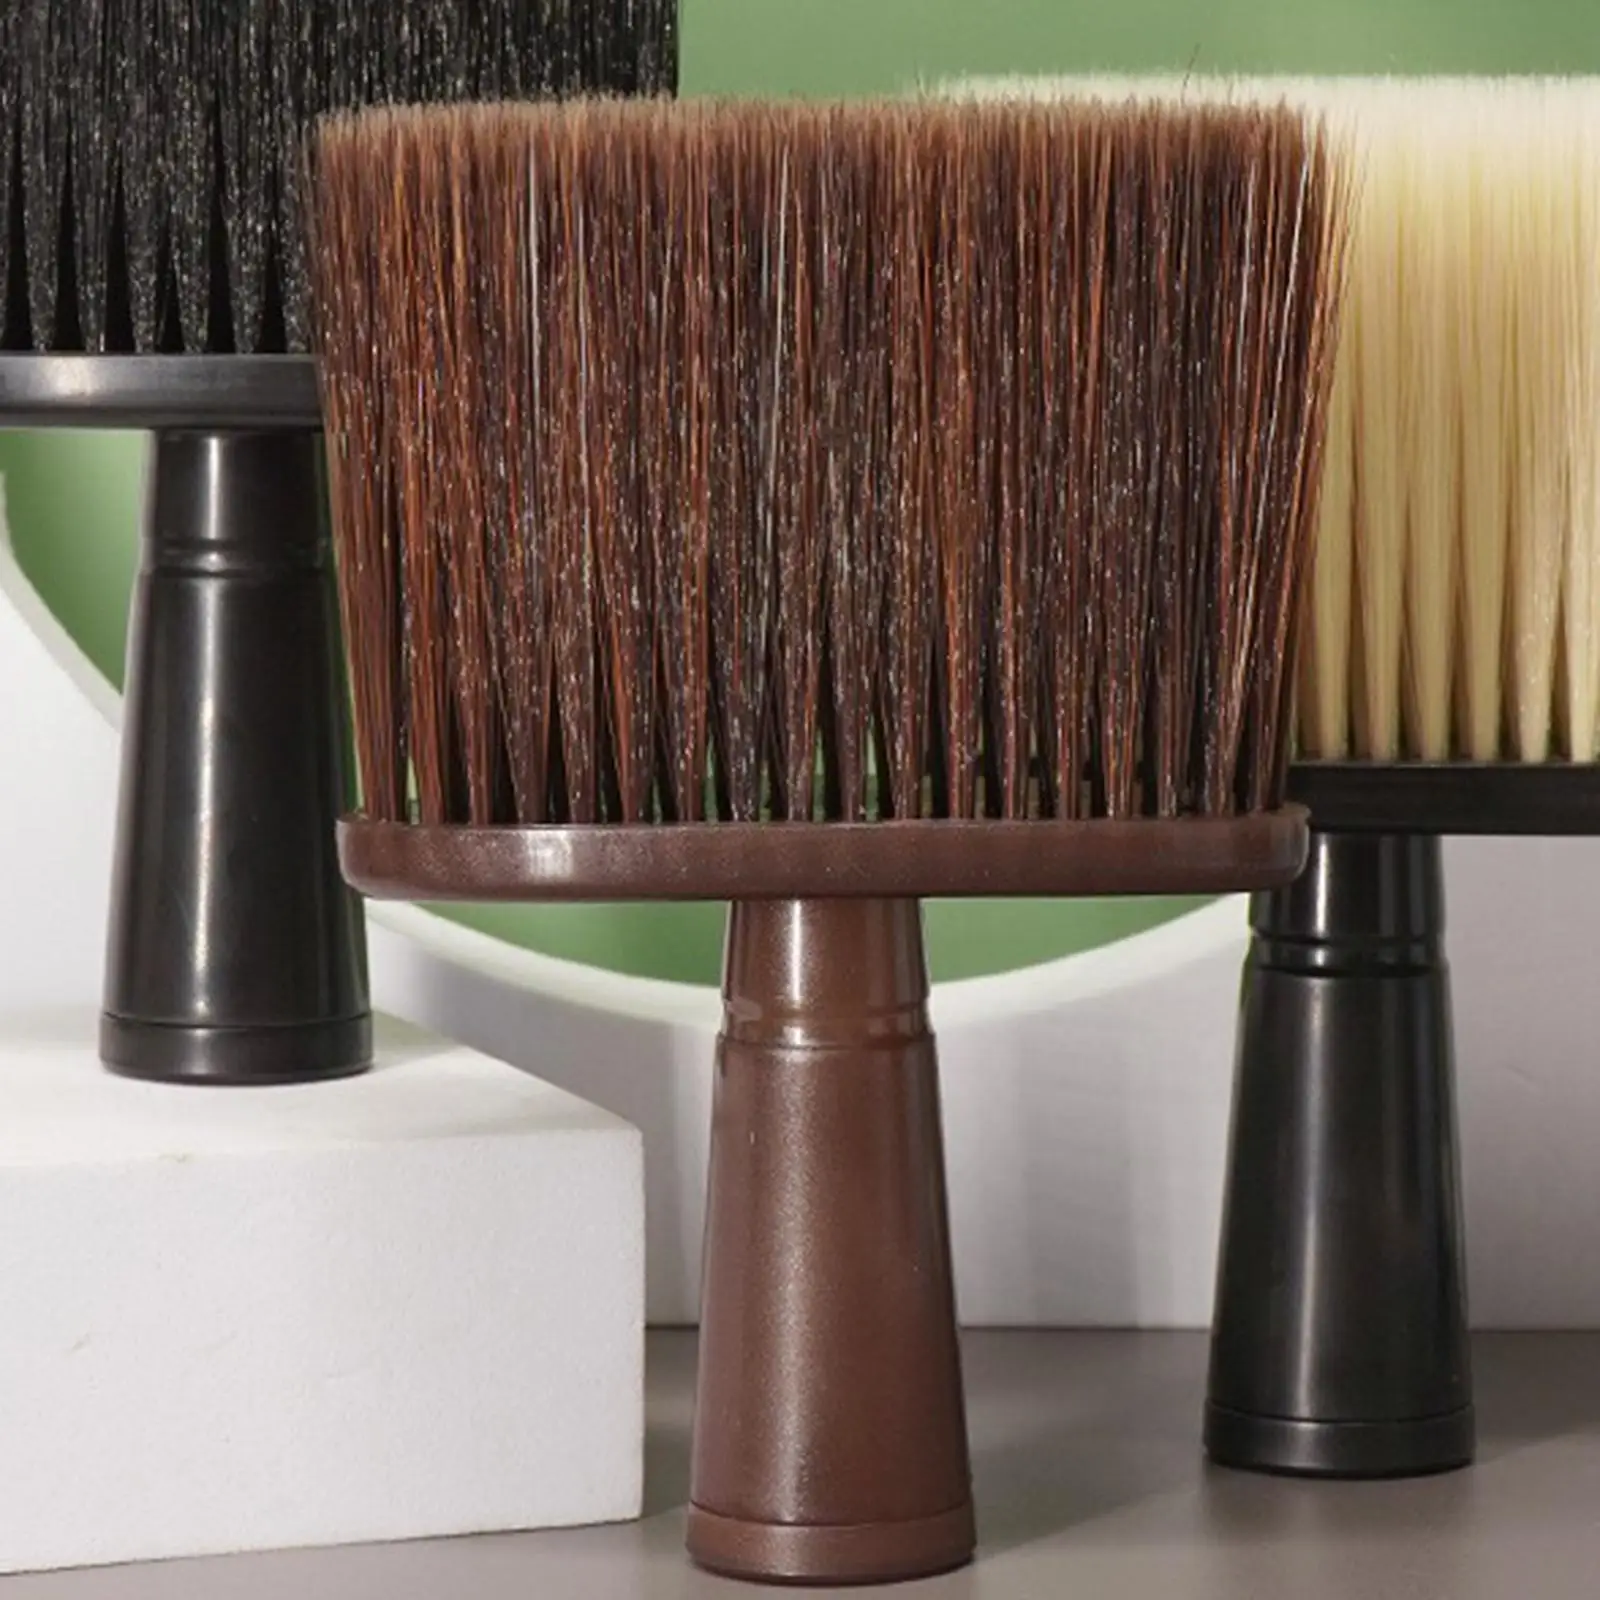 Barber Neck Duster Brush Soft Nylon Bristles Haircut Cleaning Brush for Home Use